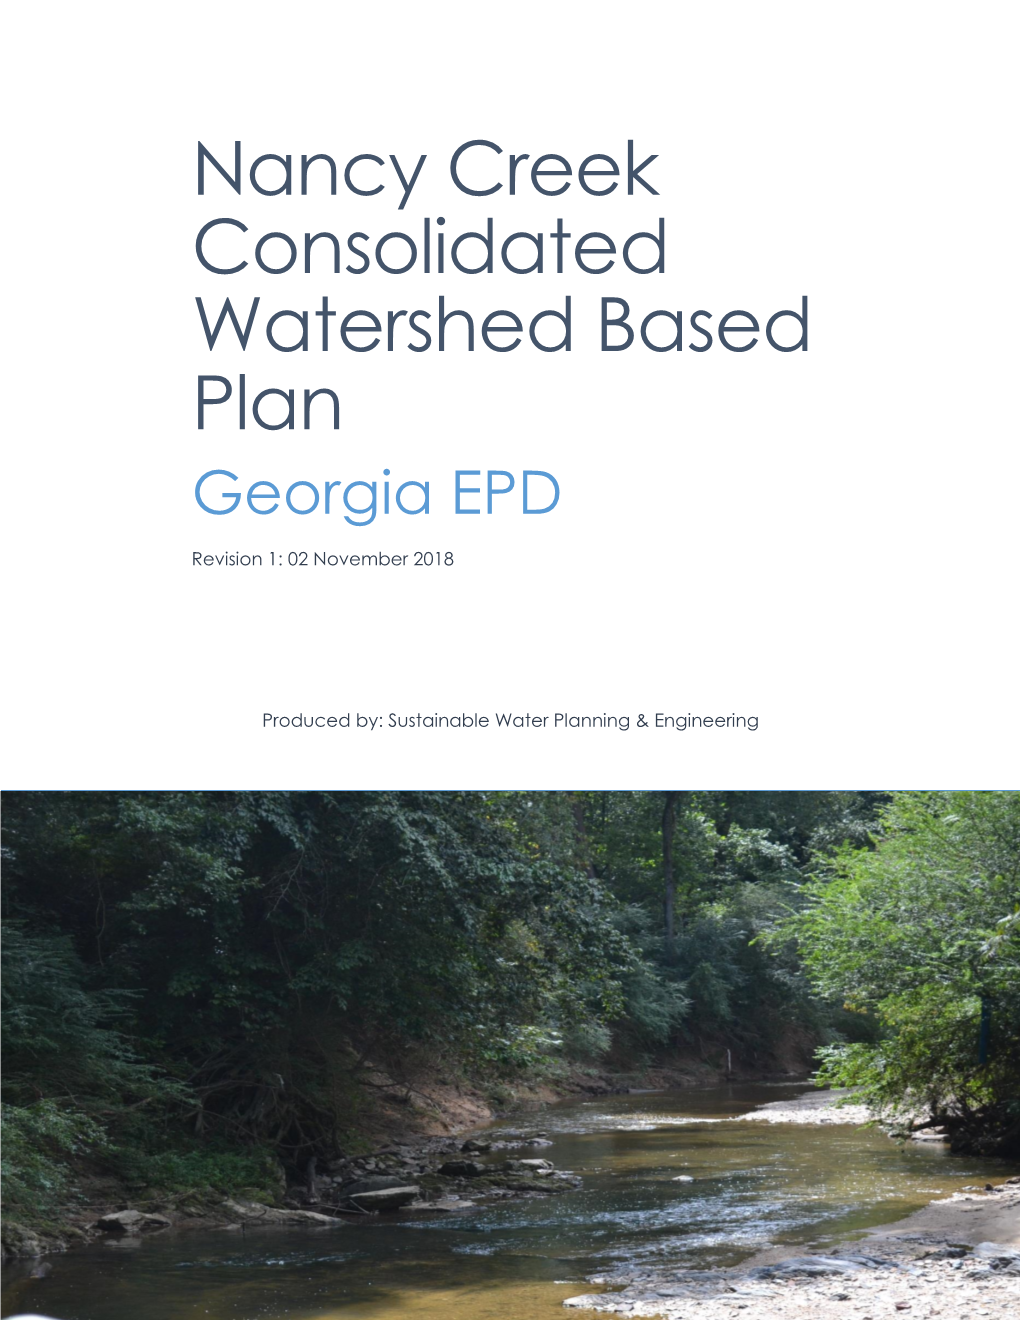 Nancy Creek Consolidated Watershed Based Plan Georgia EPD